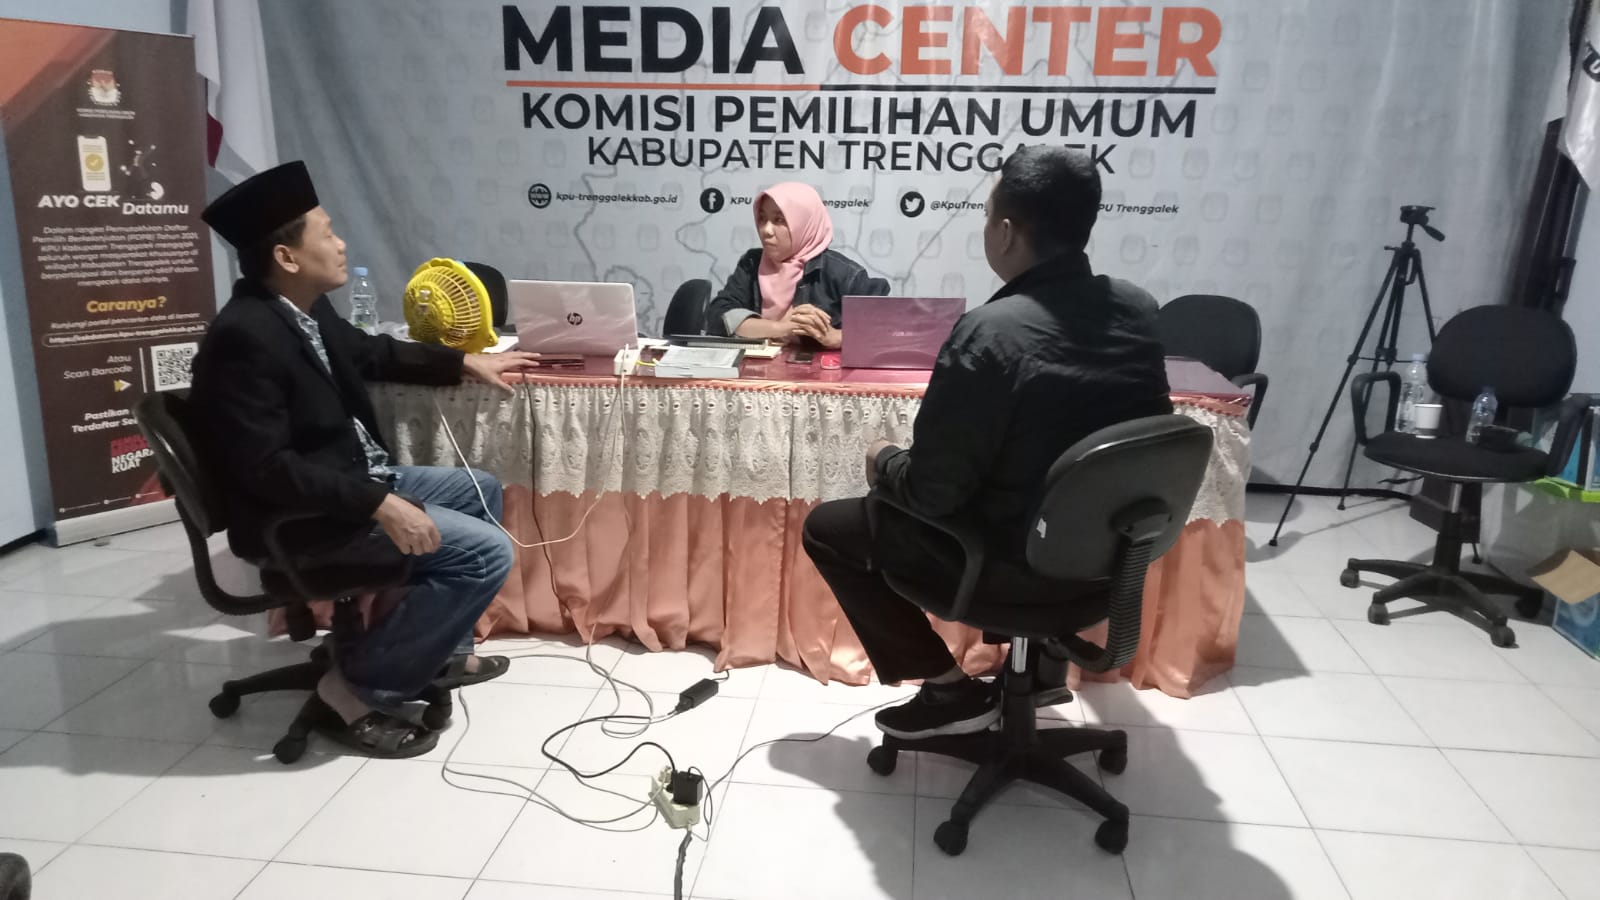 Media Center KPU Trenggalek